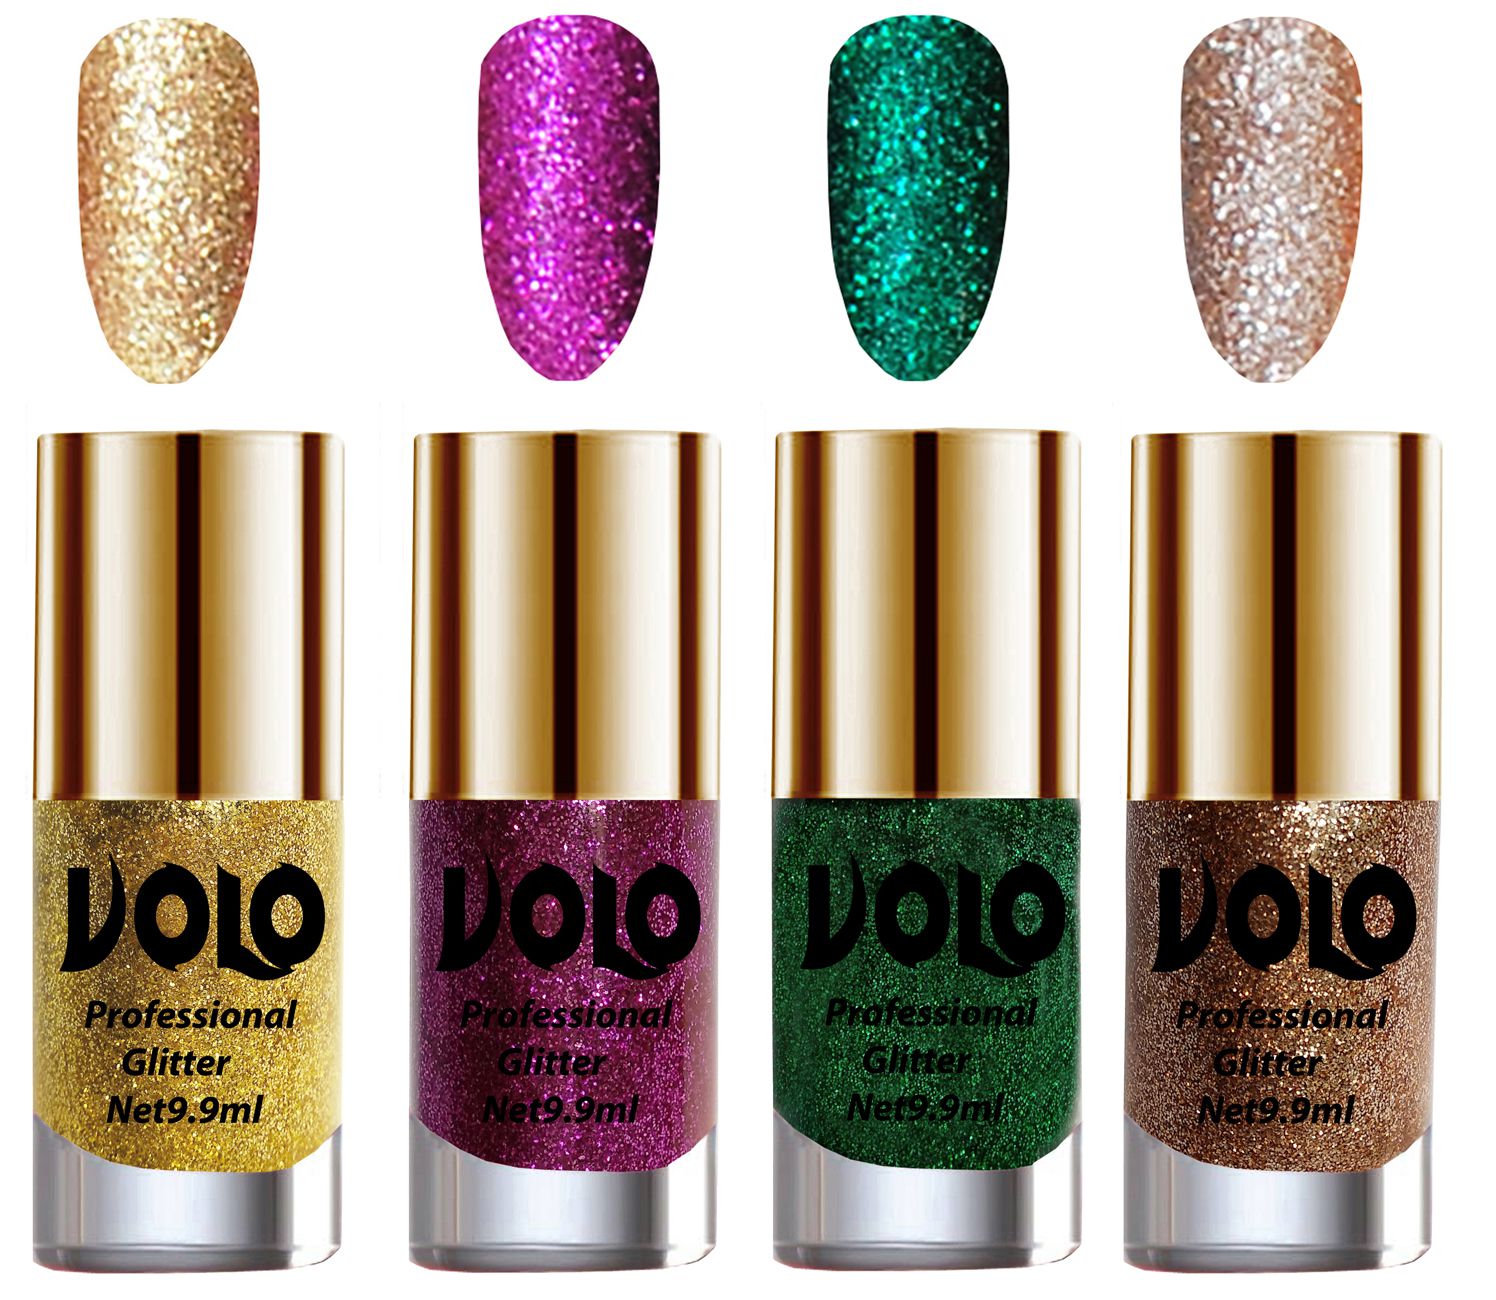     			VOLO Professionally Used Glitter Shine Nail Polish Gold,Purple,Green Gold Pack of 4 39 mL